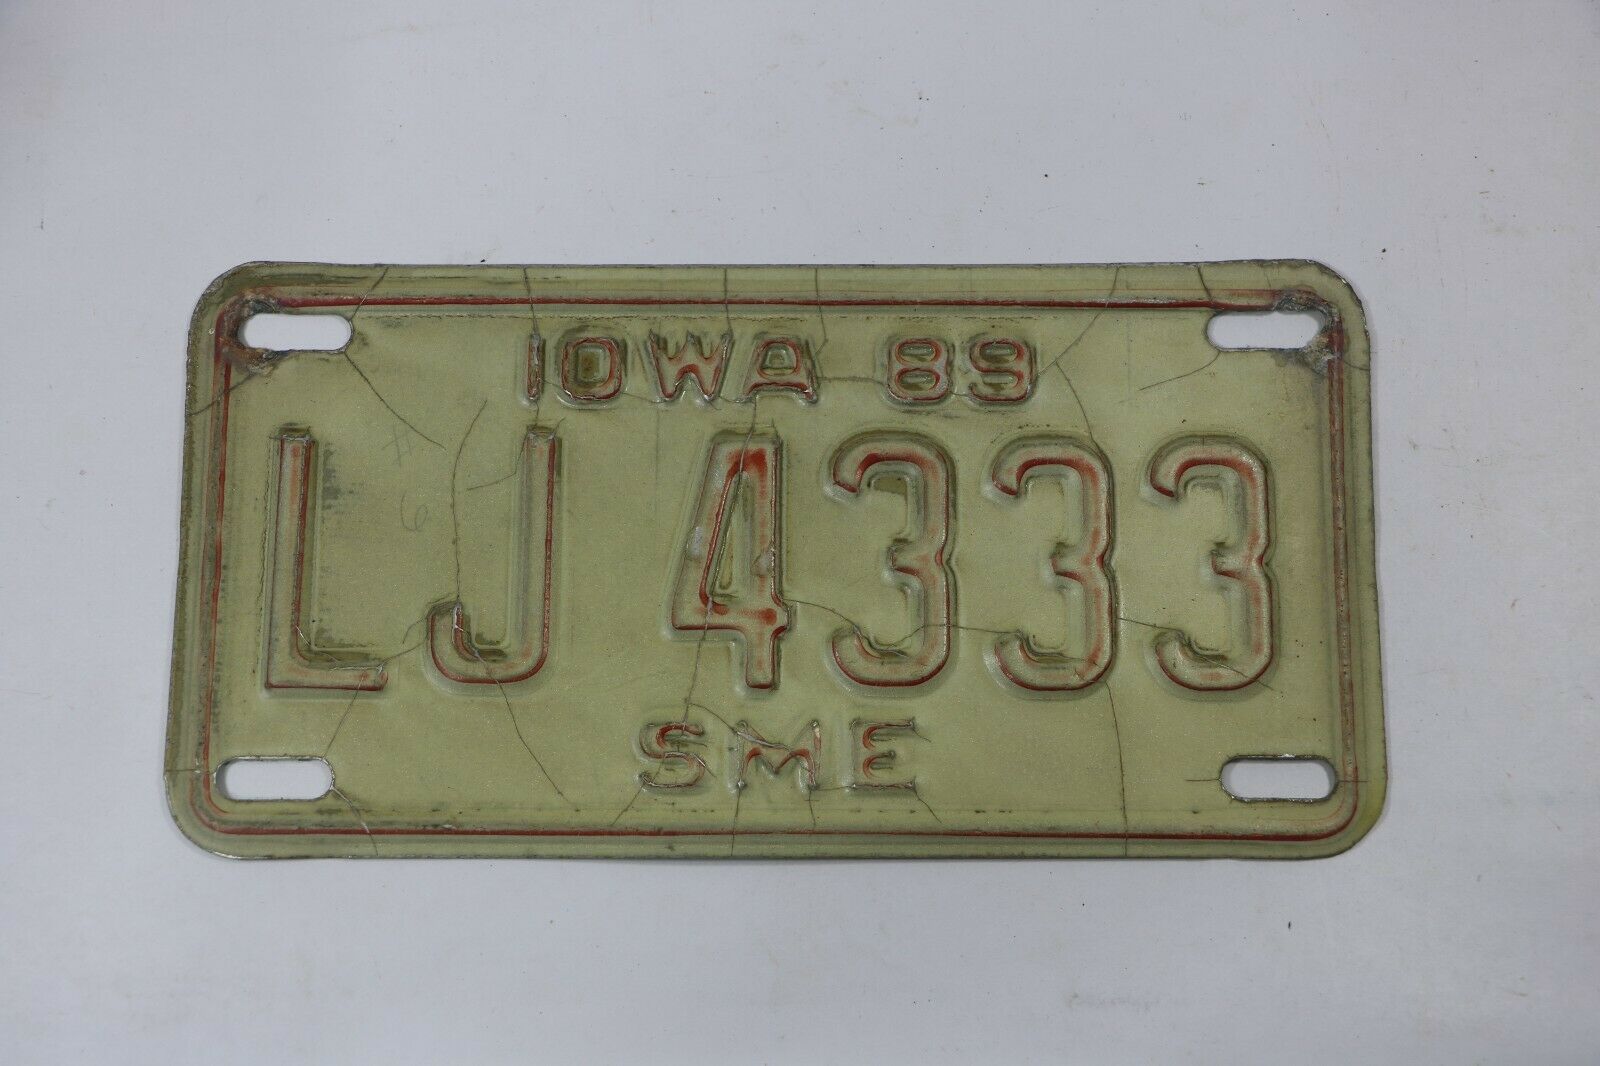 1989 Iowa Motorcycle License Plate, Tag Number Is Lj4333....sme